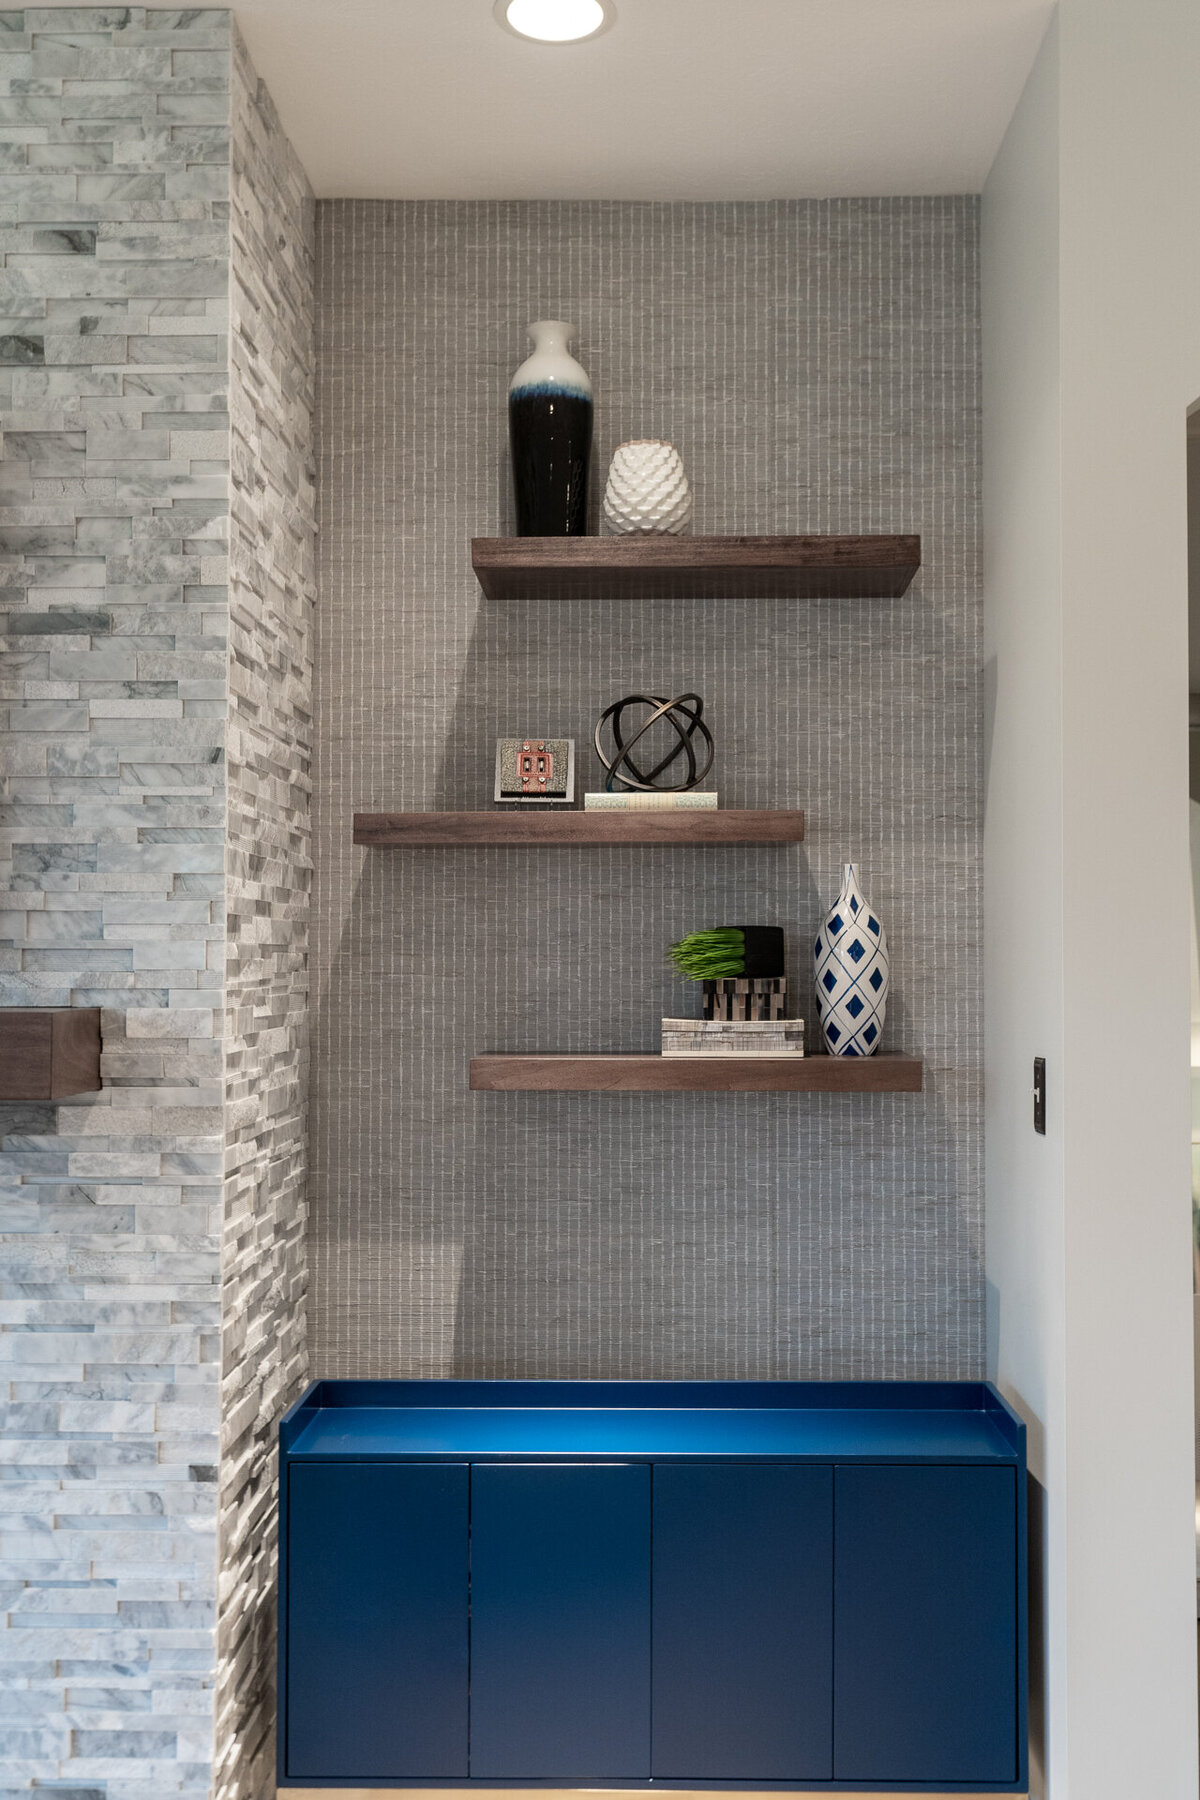 wooden block shelves on wall above blue ottoman